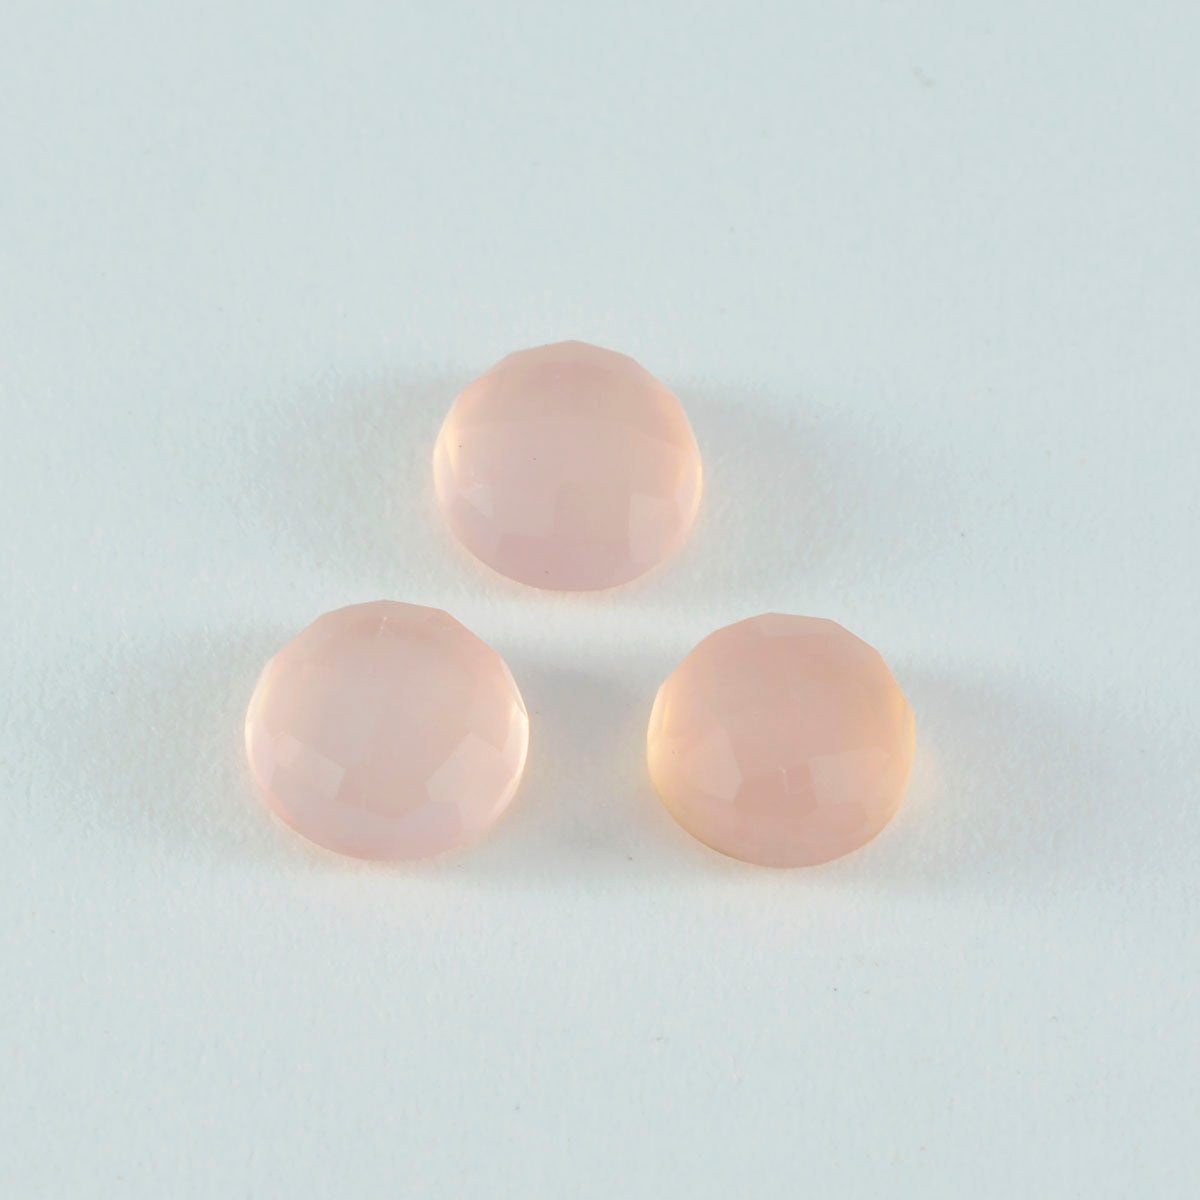 Riyogems 1PC Pink Rose Quartz Faceted 15x15 mm Round Shape excellent Quality Loose Gems